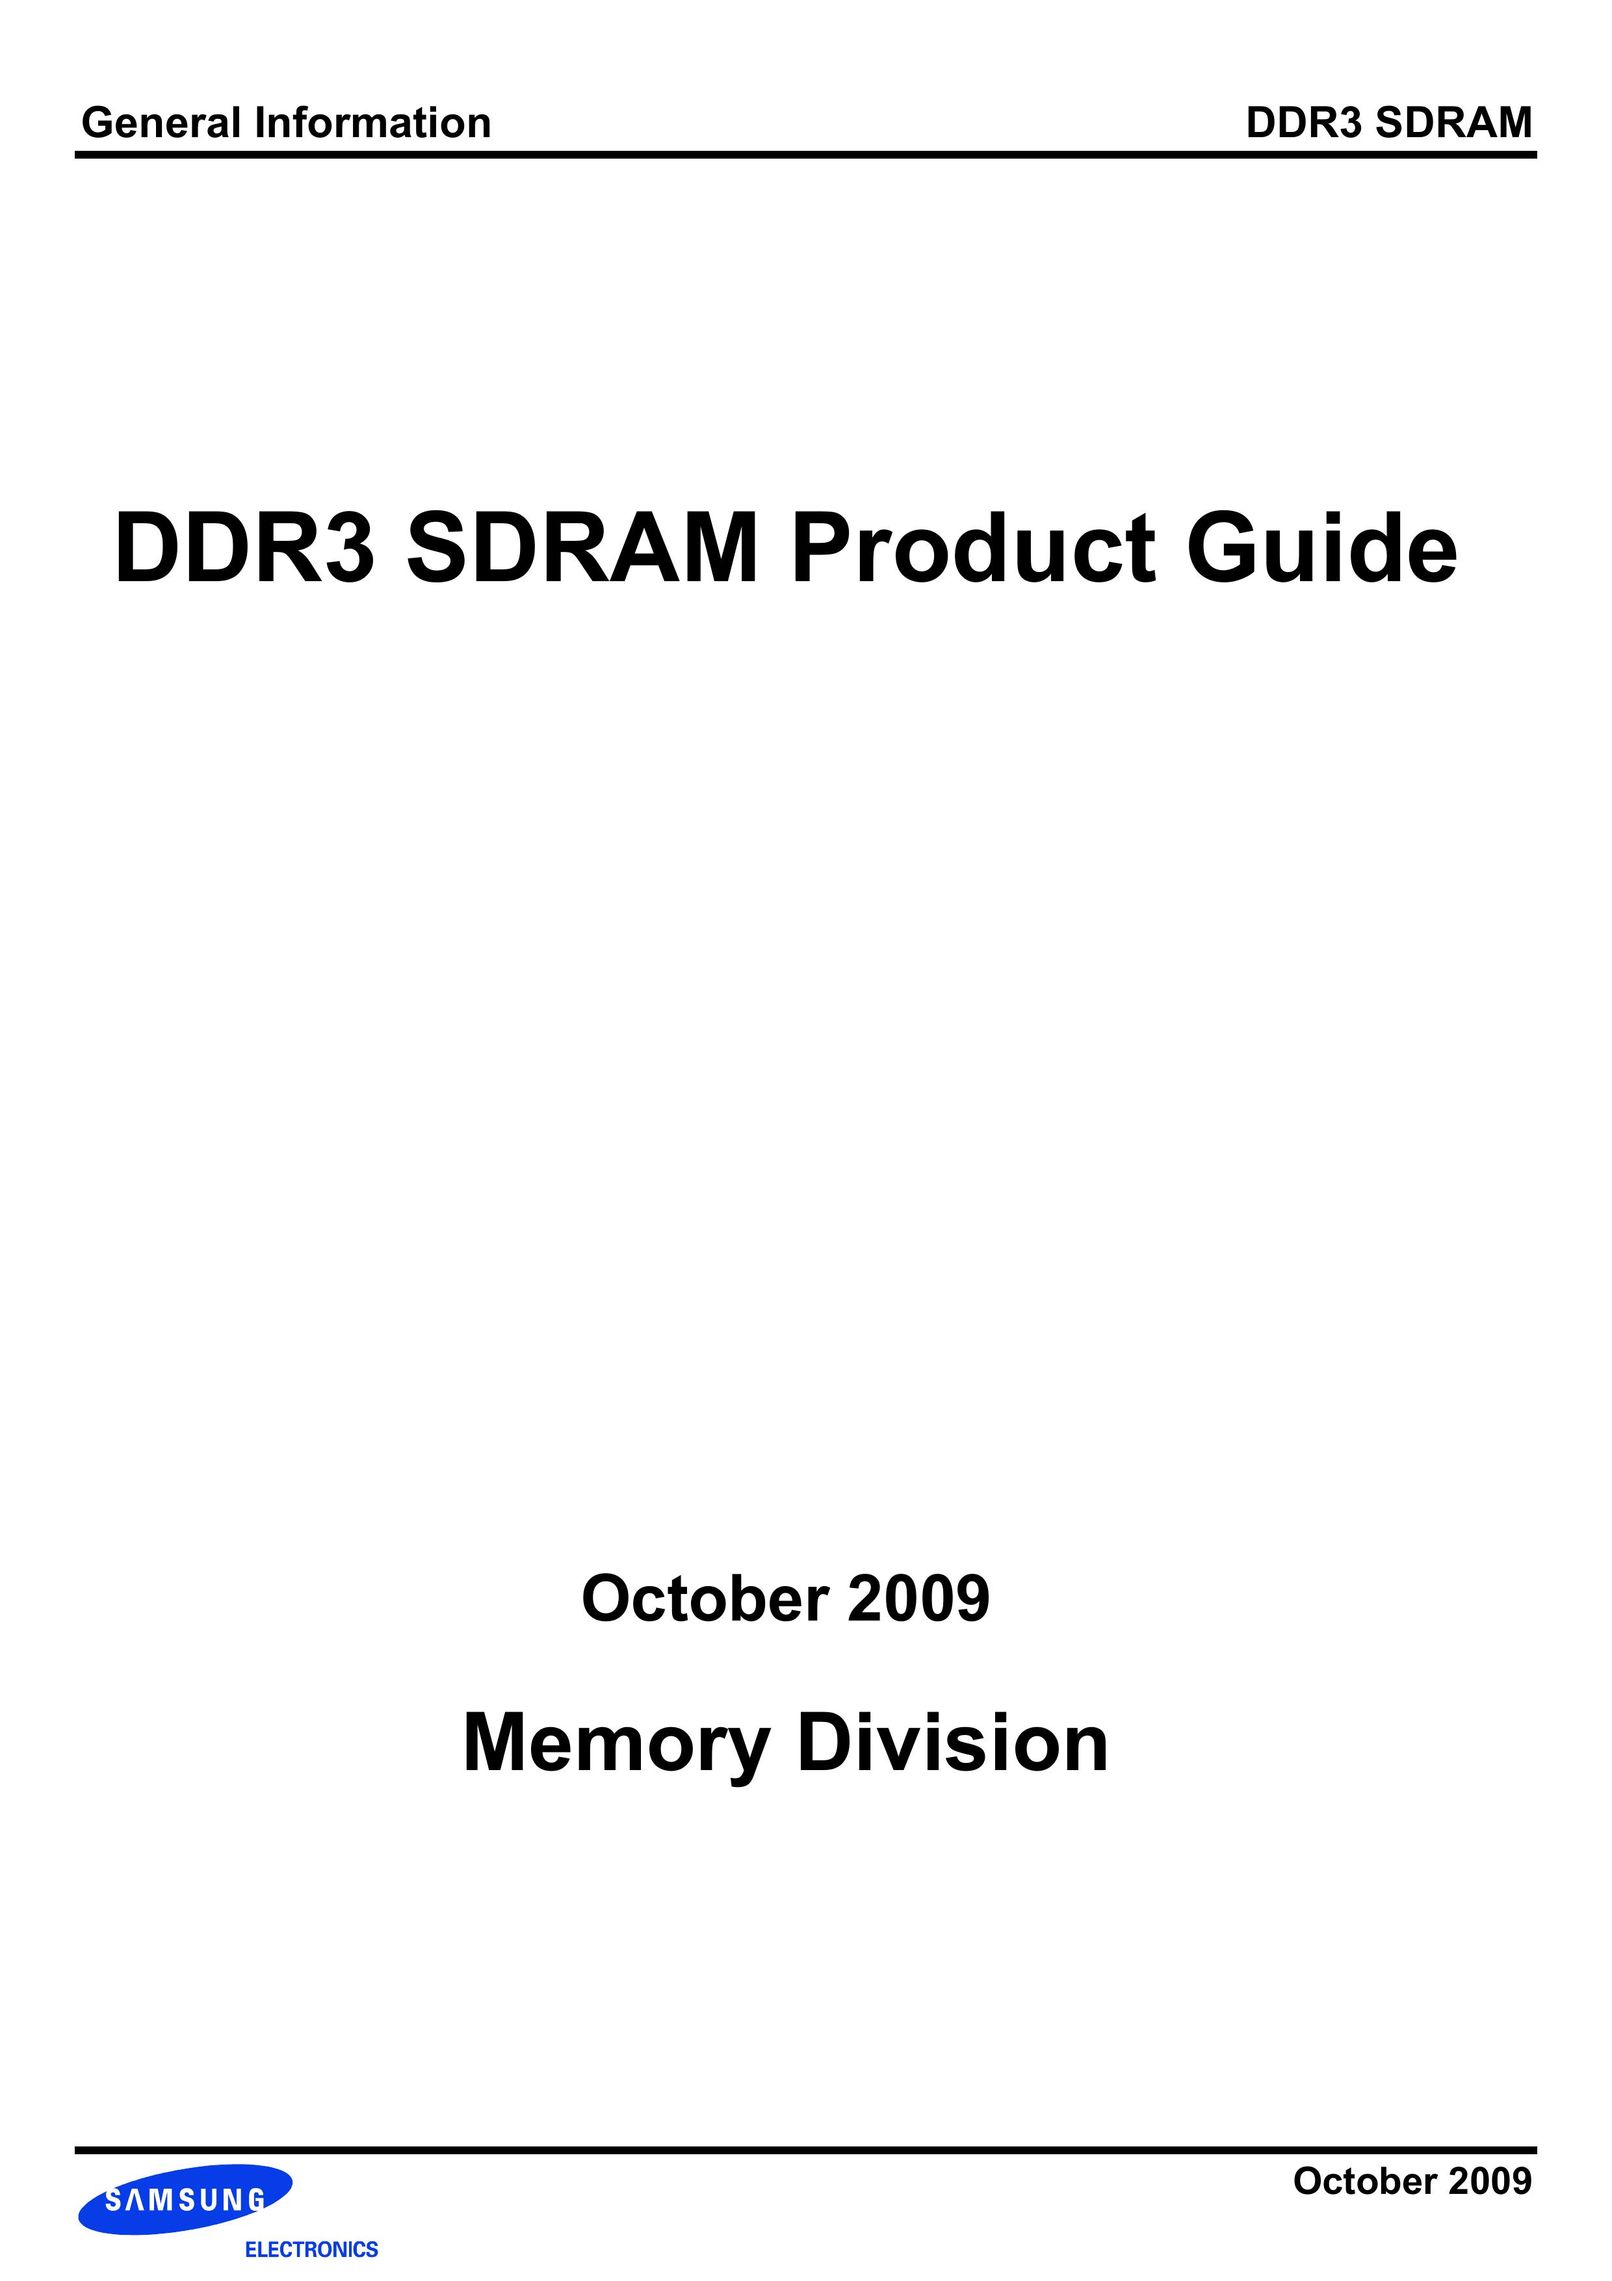 Samsung DDR3 Computer Hardware User Manual